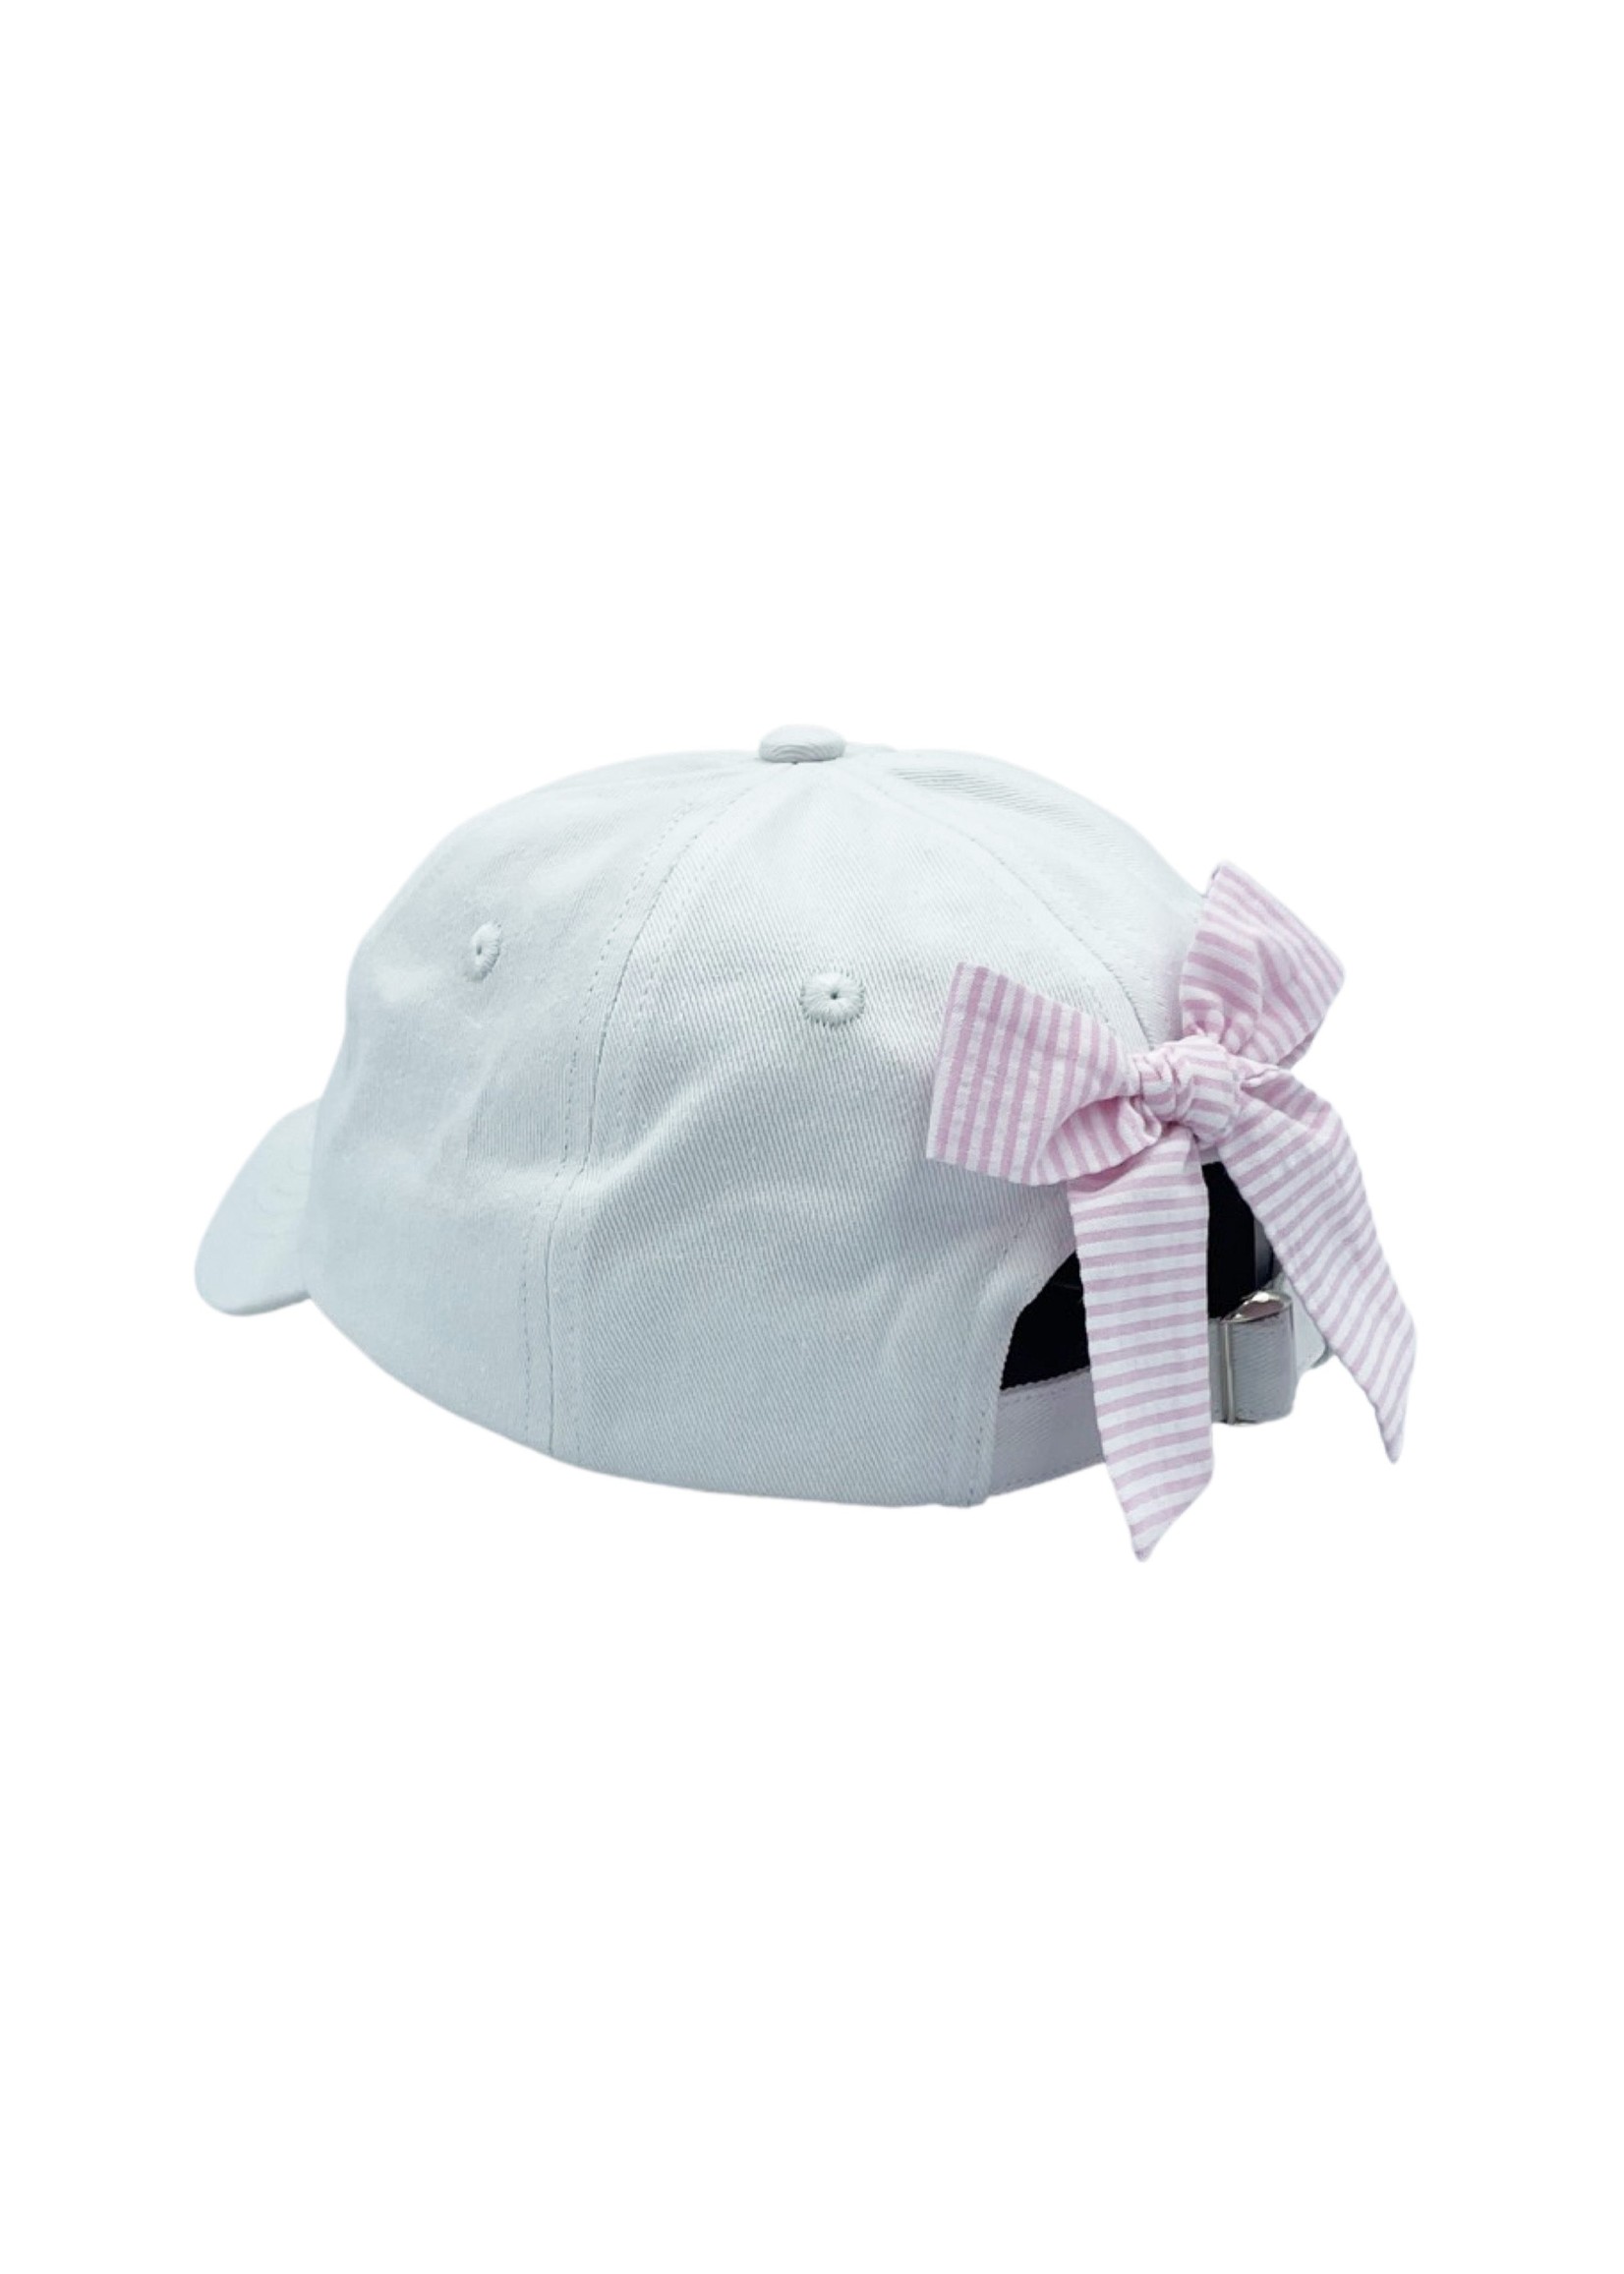 Bits & Bows Bits & Bows Tennis White Hat - Pink/White Seersucker Bow